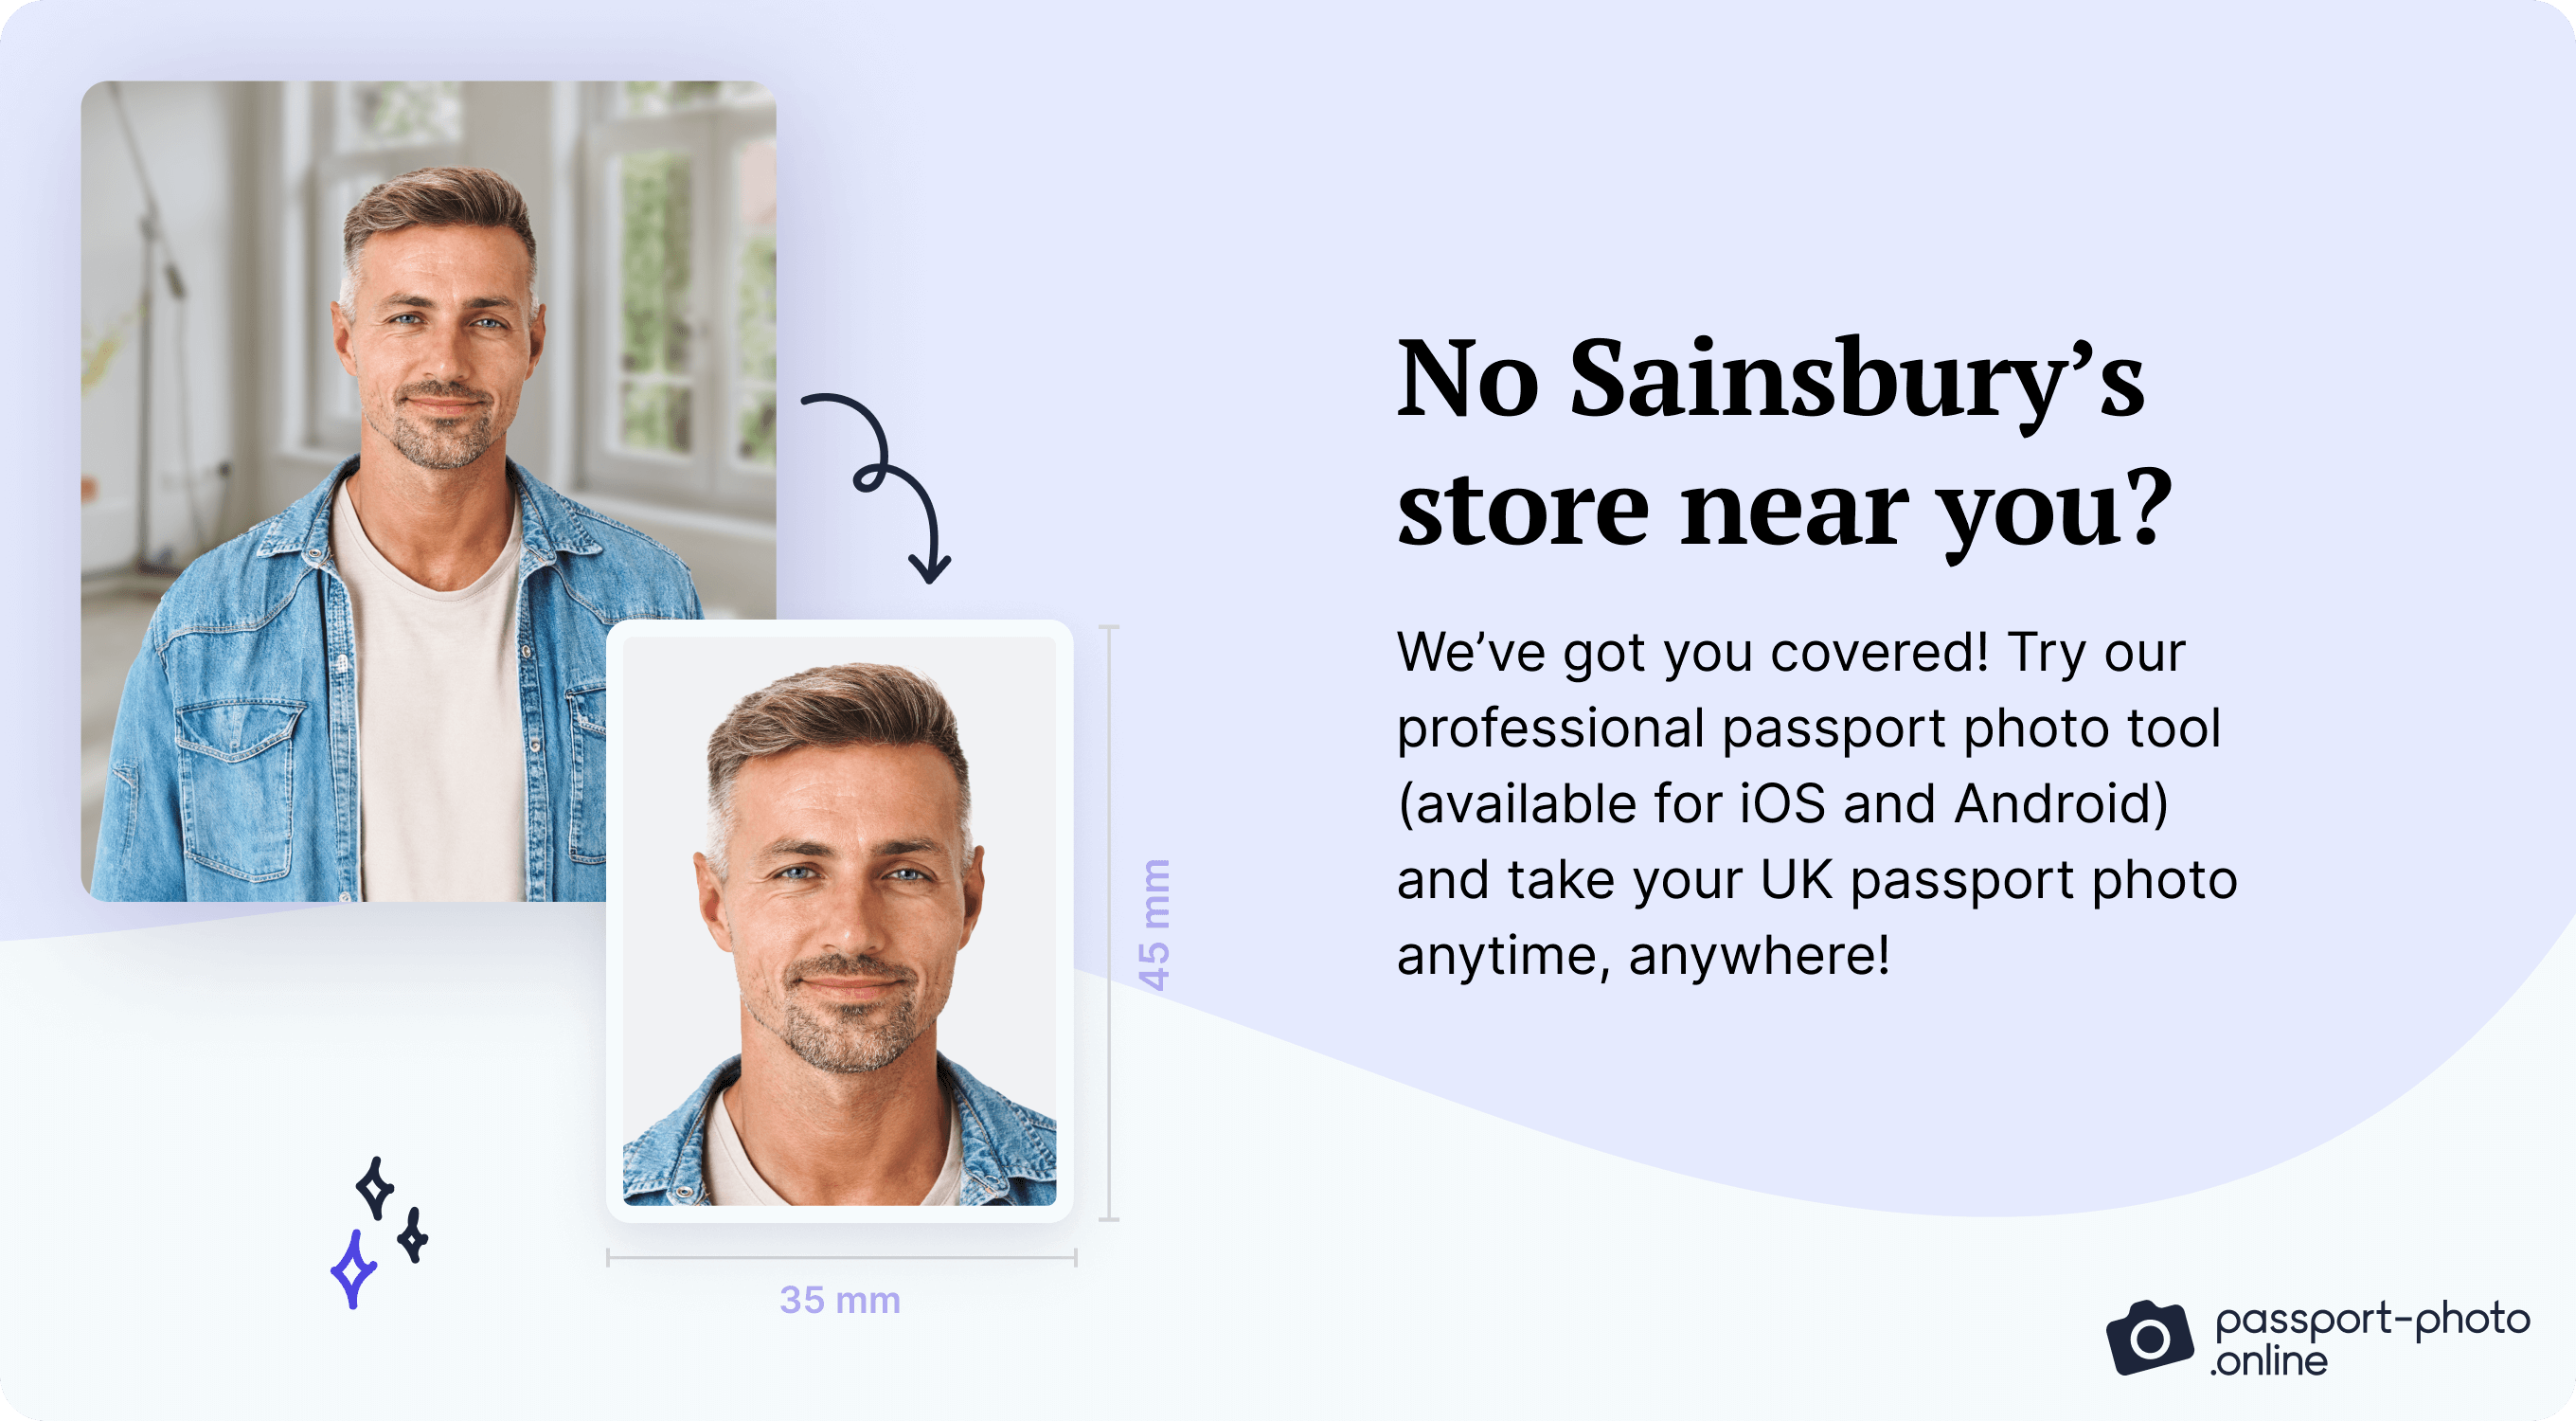 Passport Photo Online—an alternative to Sainsbury’s passport photo service.